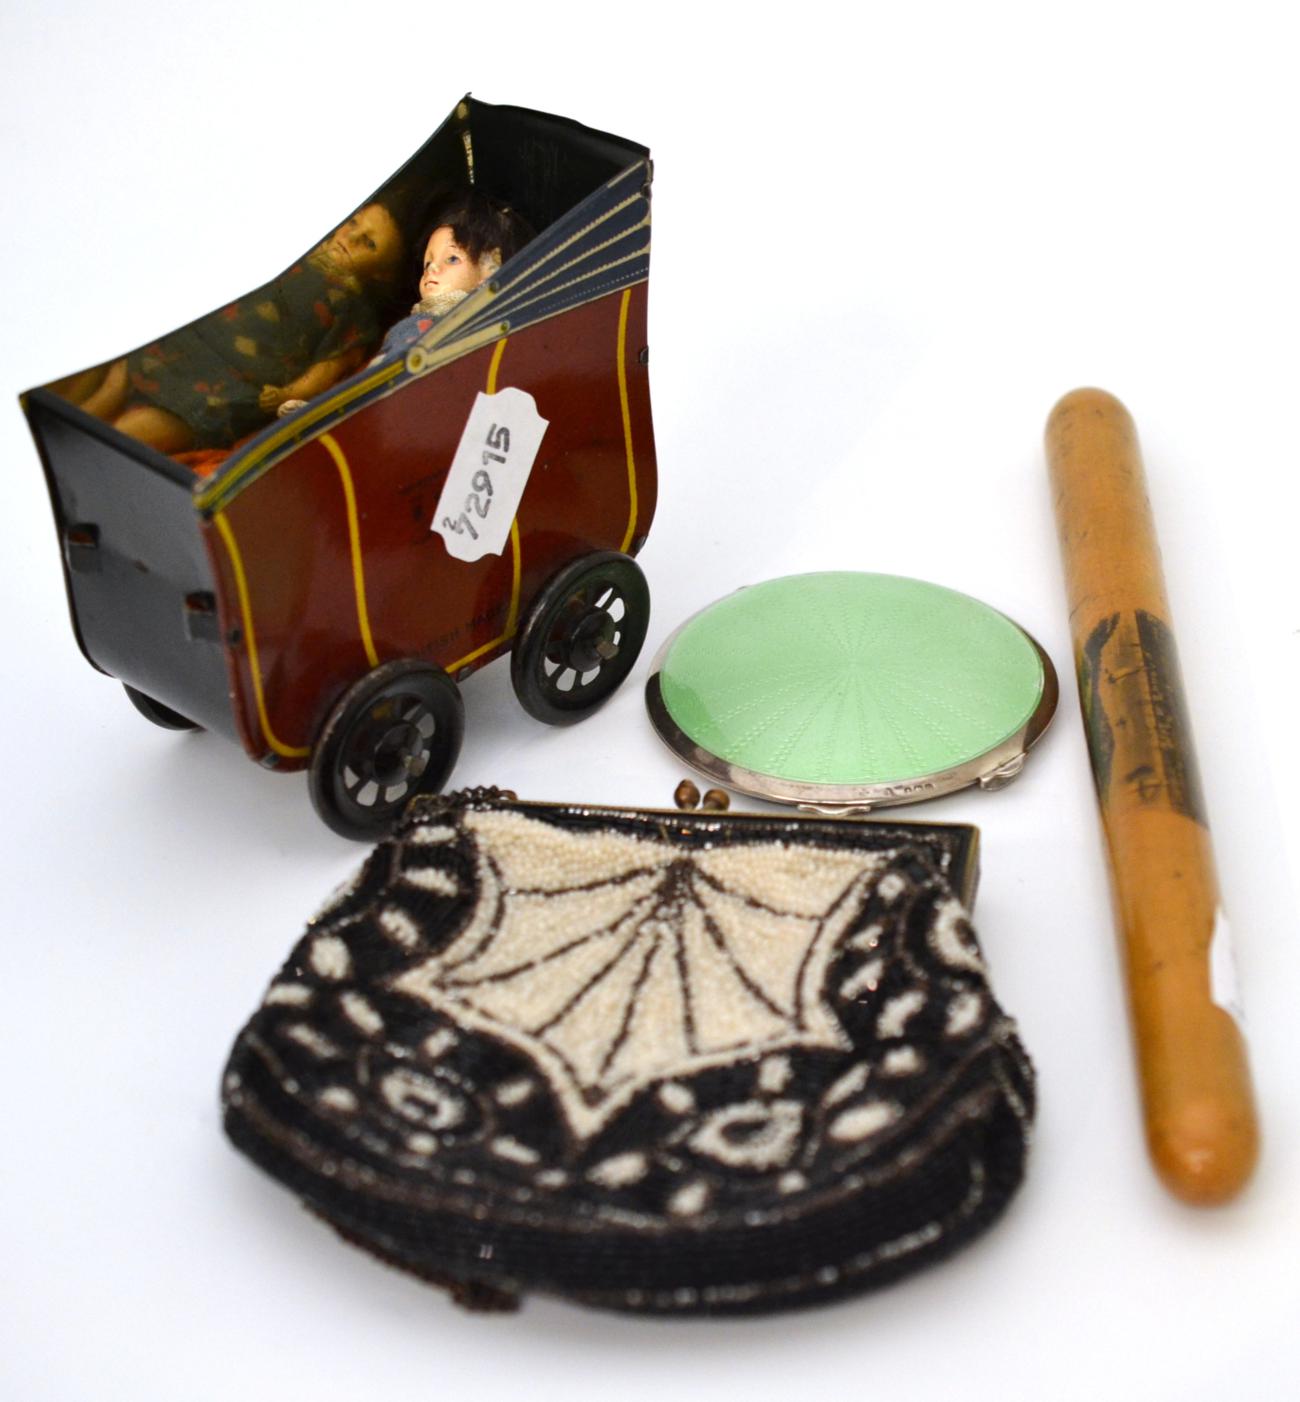 Tin plate perambulator and doll, Victorian purse, Mauchline ware needle case and silver compact